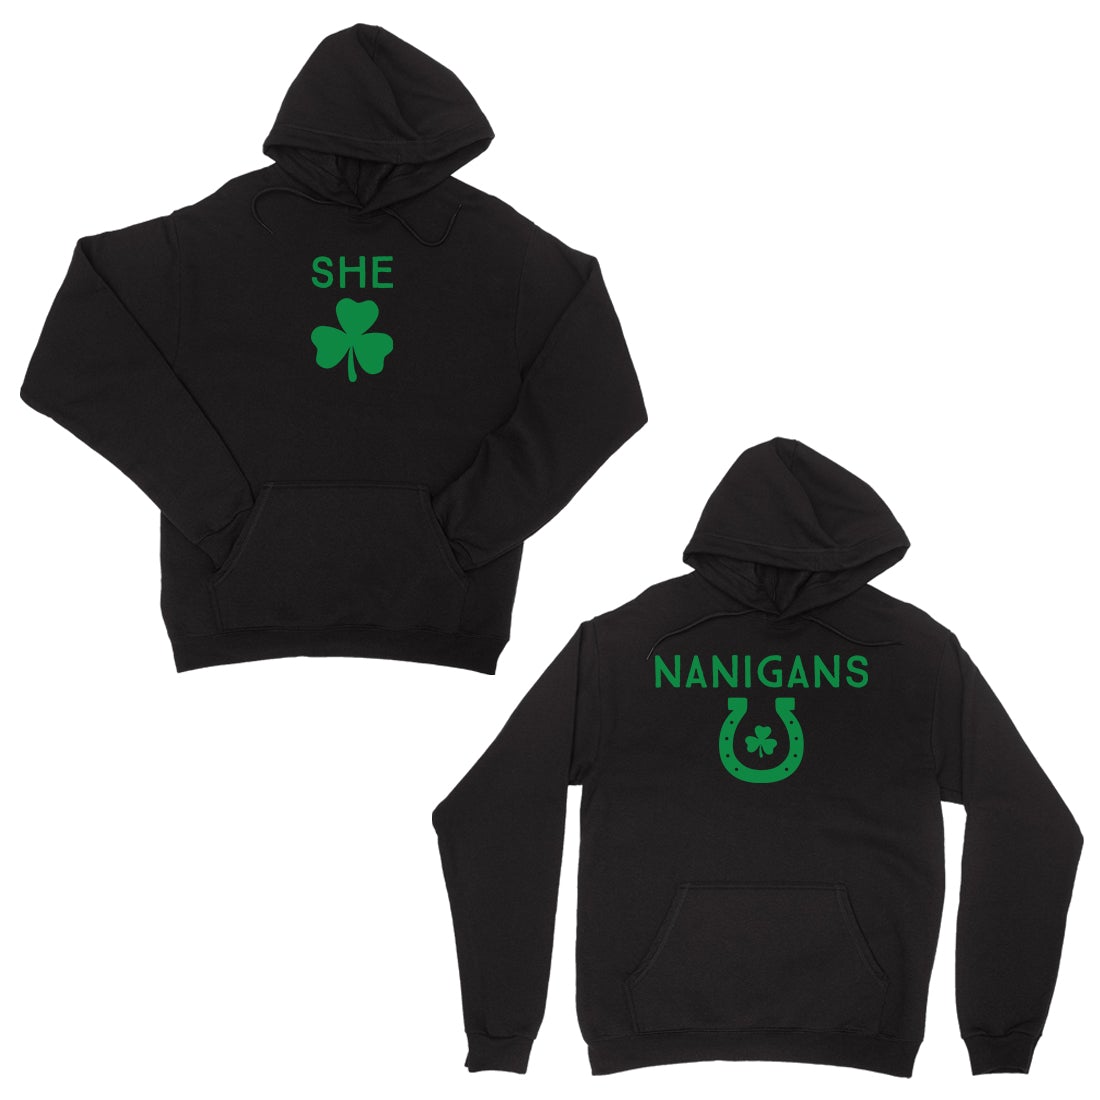 Shenanigans Matching Pullover Hoodies Black Funny Irish Friend Gift